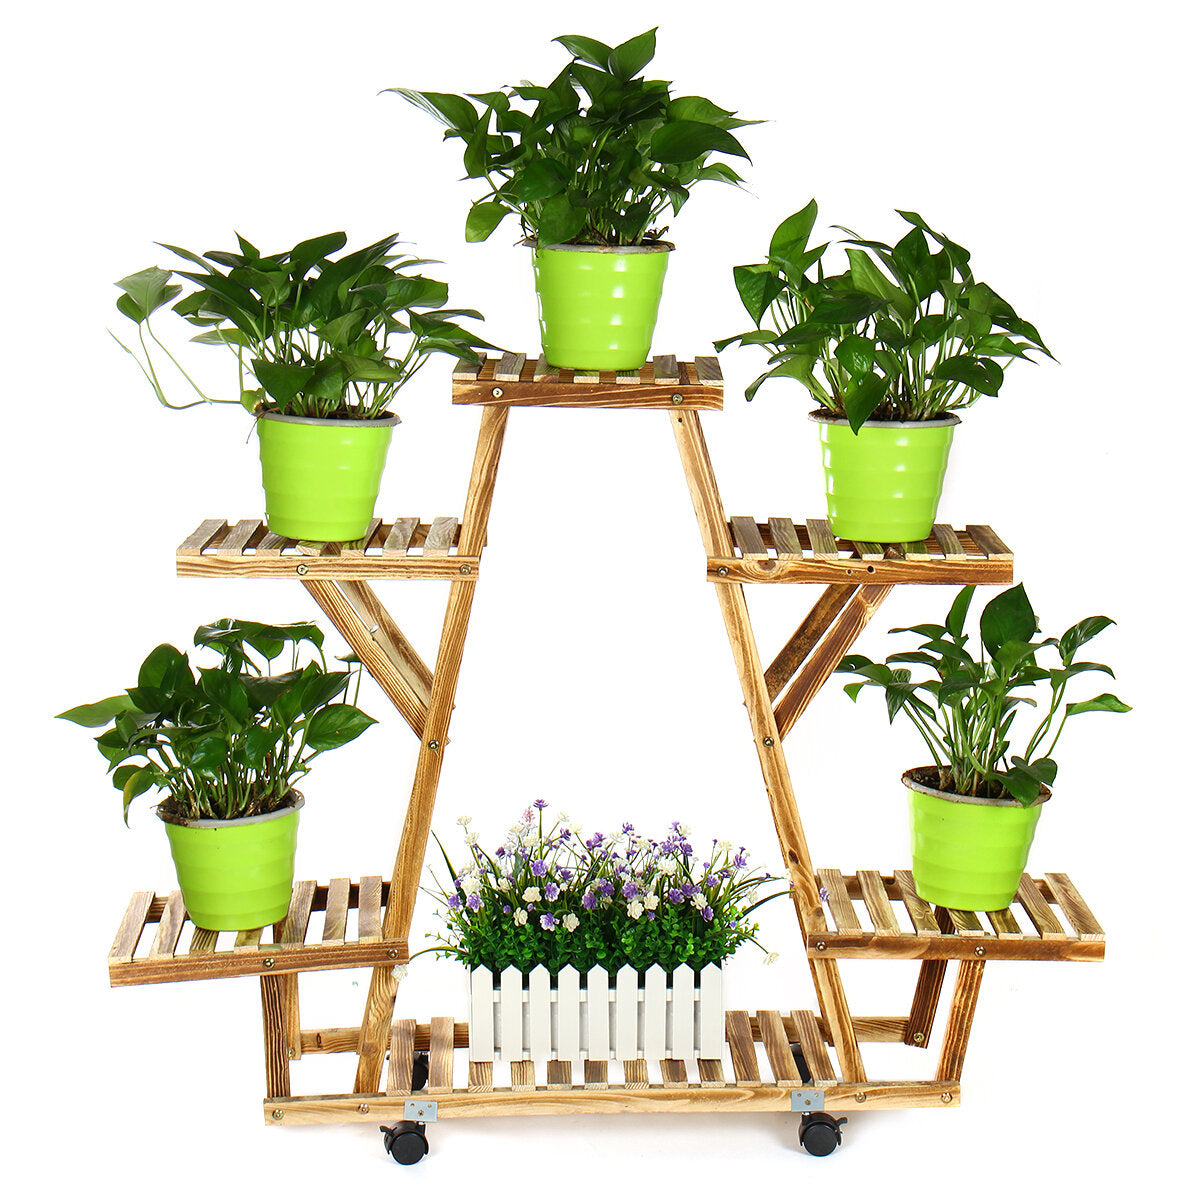 Wooden Plant Stand Shelf 4 Tier Flower Pot Holder Multi-Shelving Storage Rack for Plants Displaying Home Garden Patio Corner Outdoor Indoor